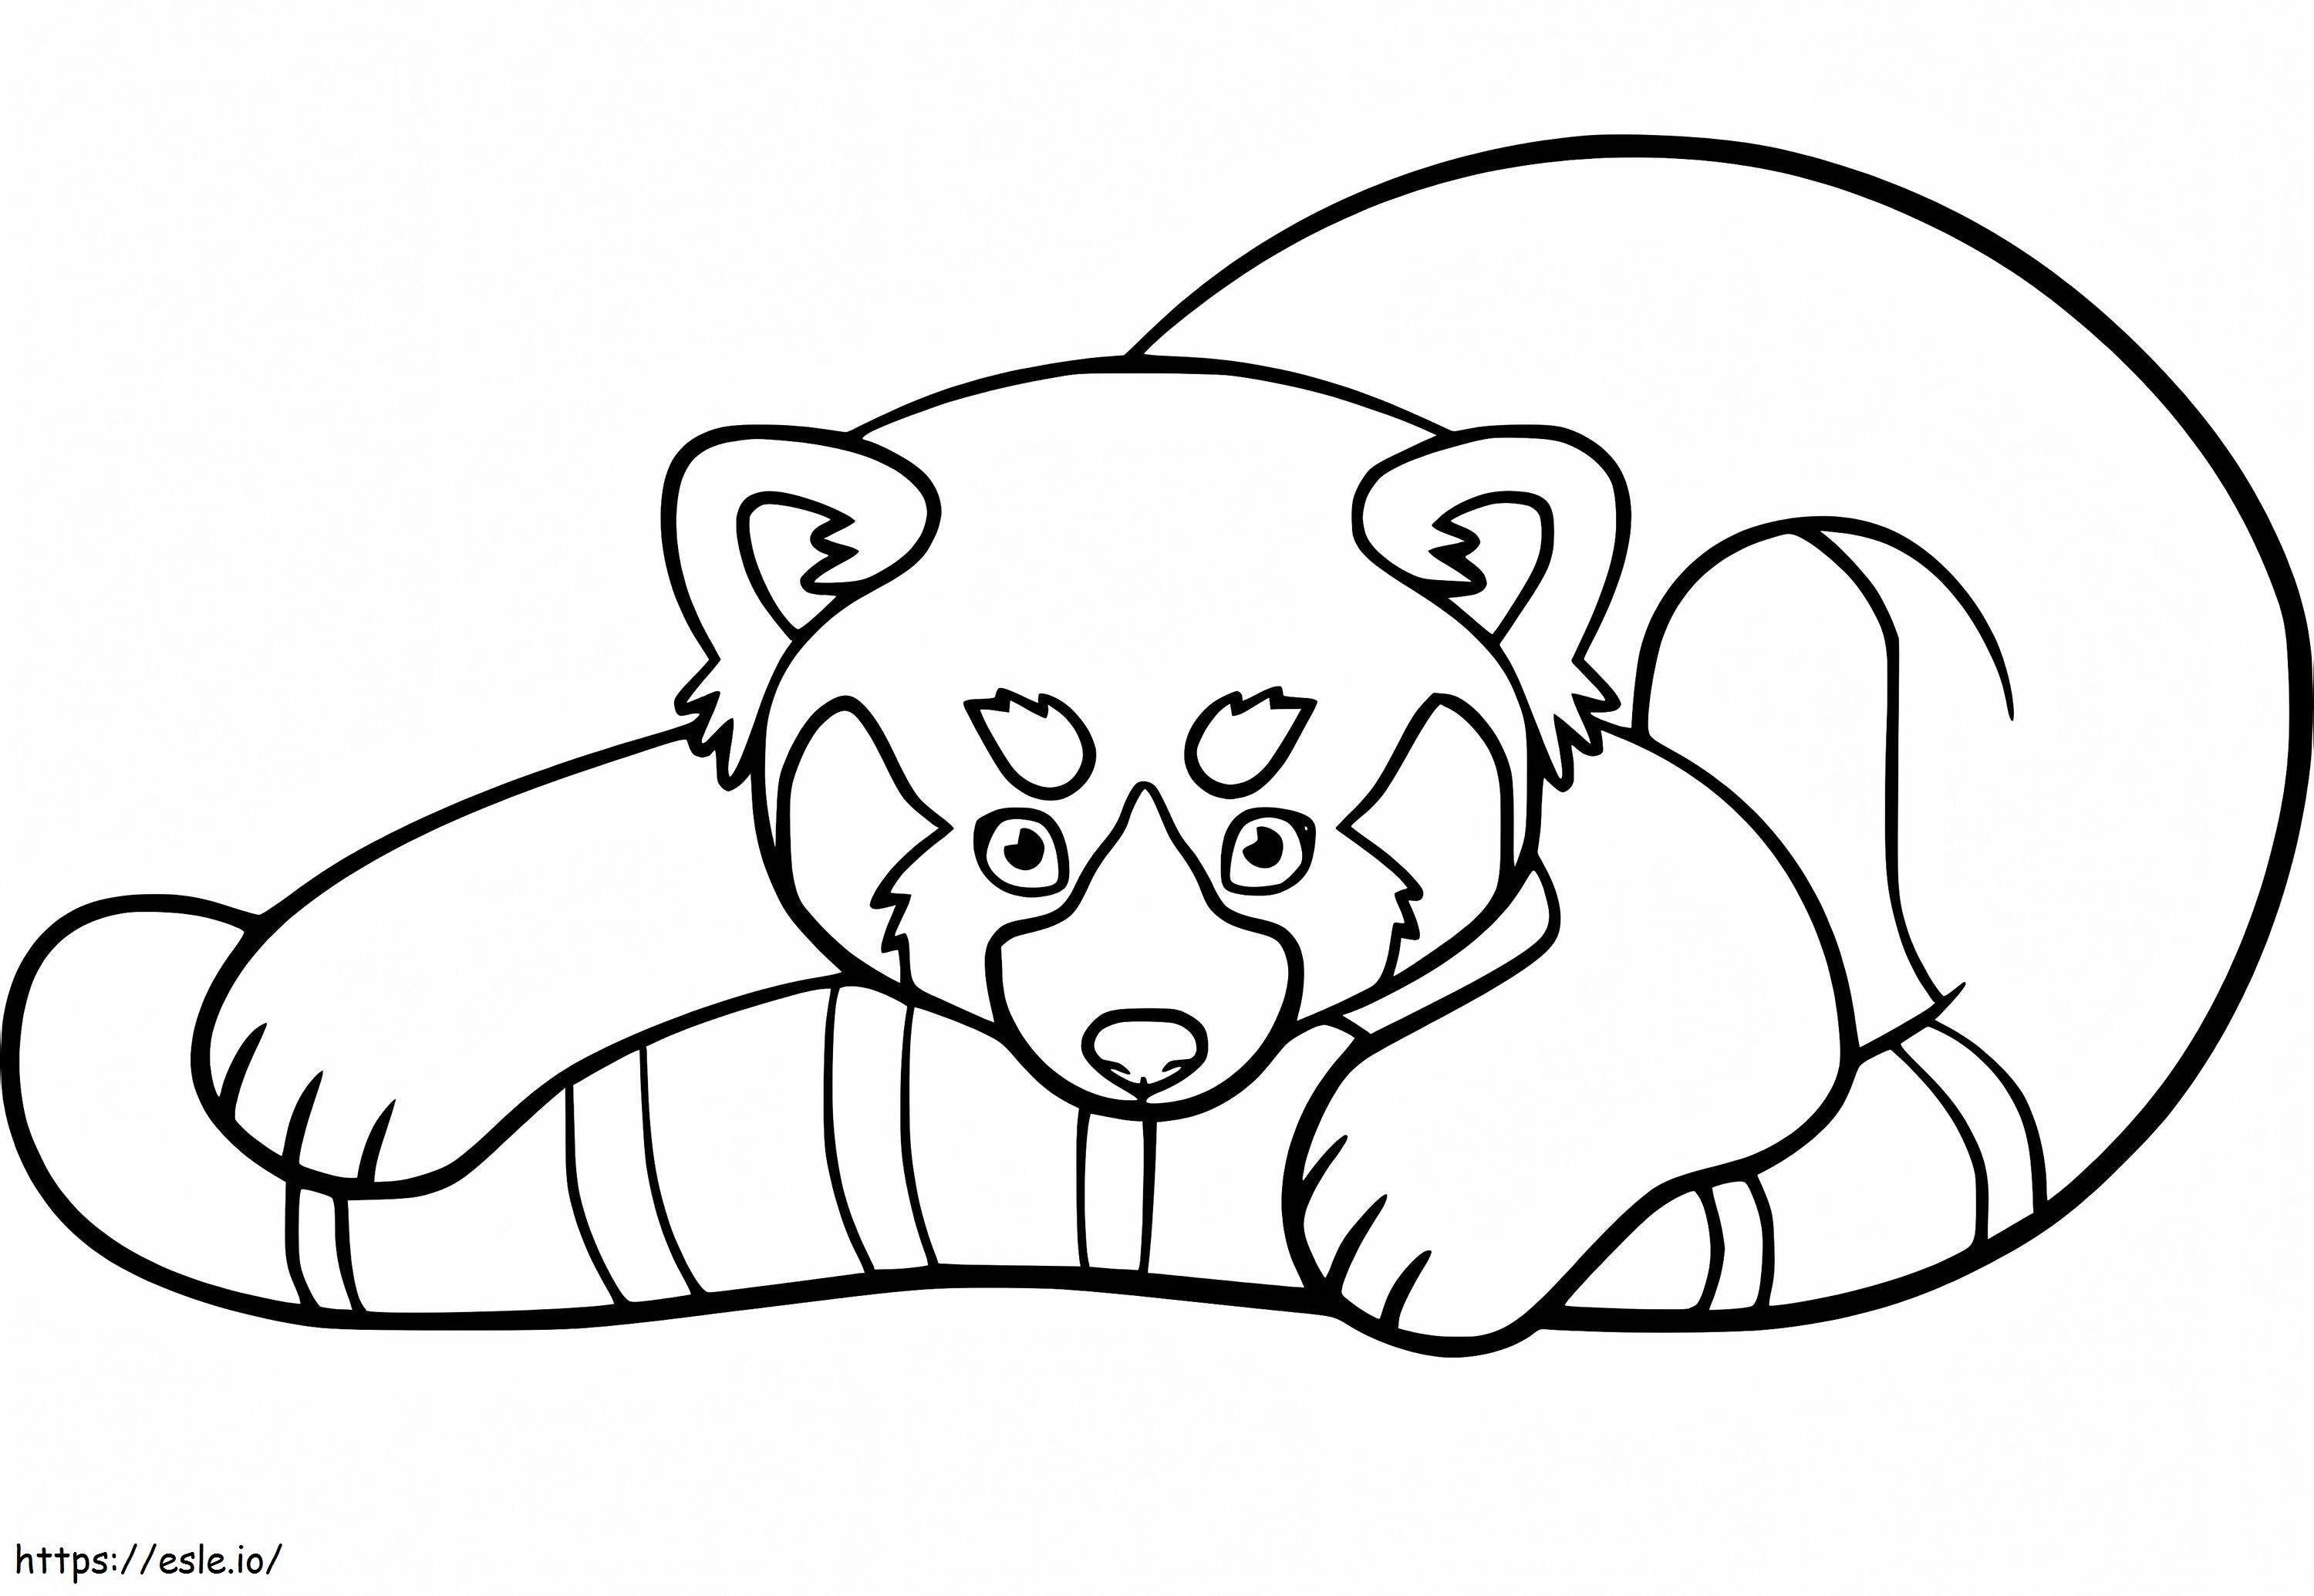 Red Panda 6 coloring page